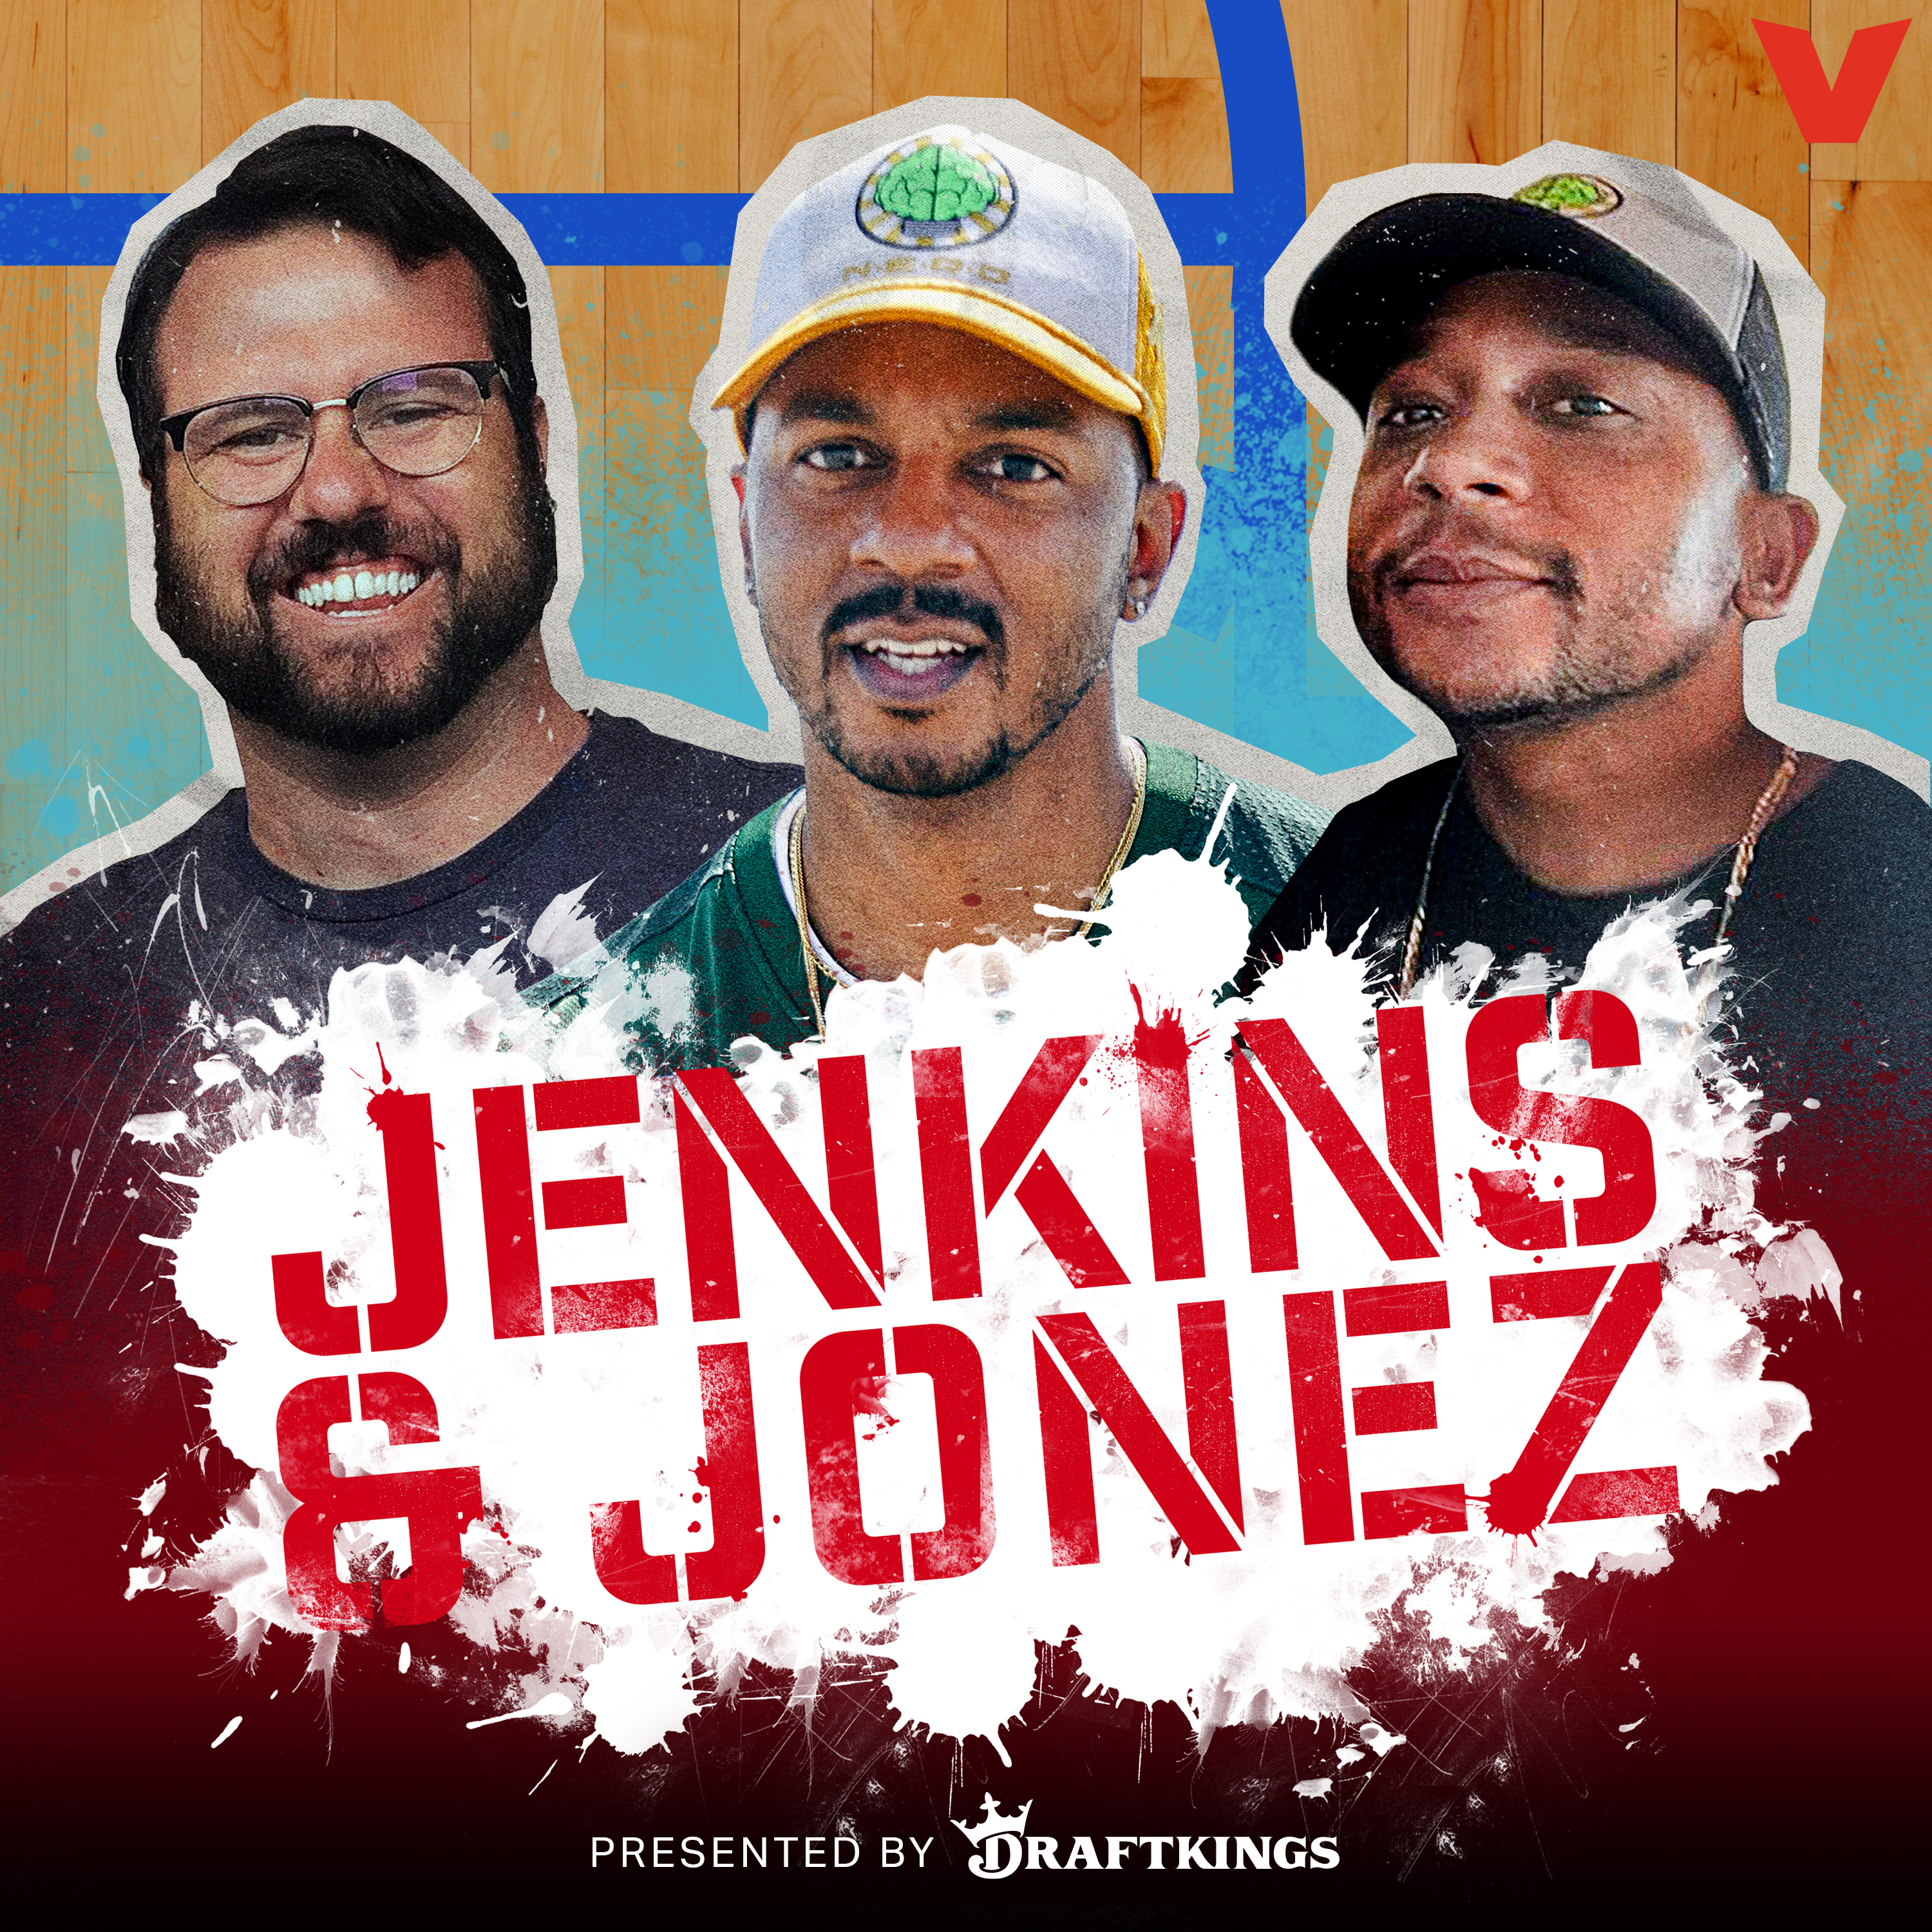 Jenkins and Jonez - A Spinning, Flailing, Backhand Fist